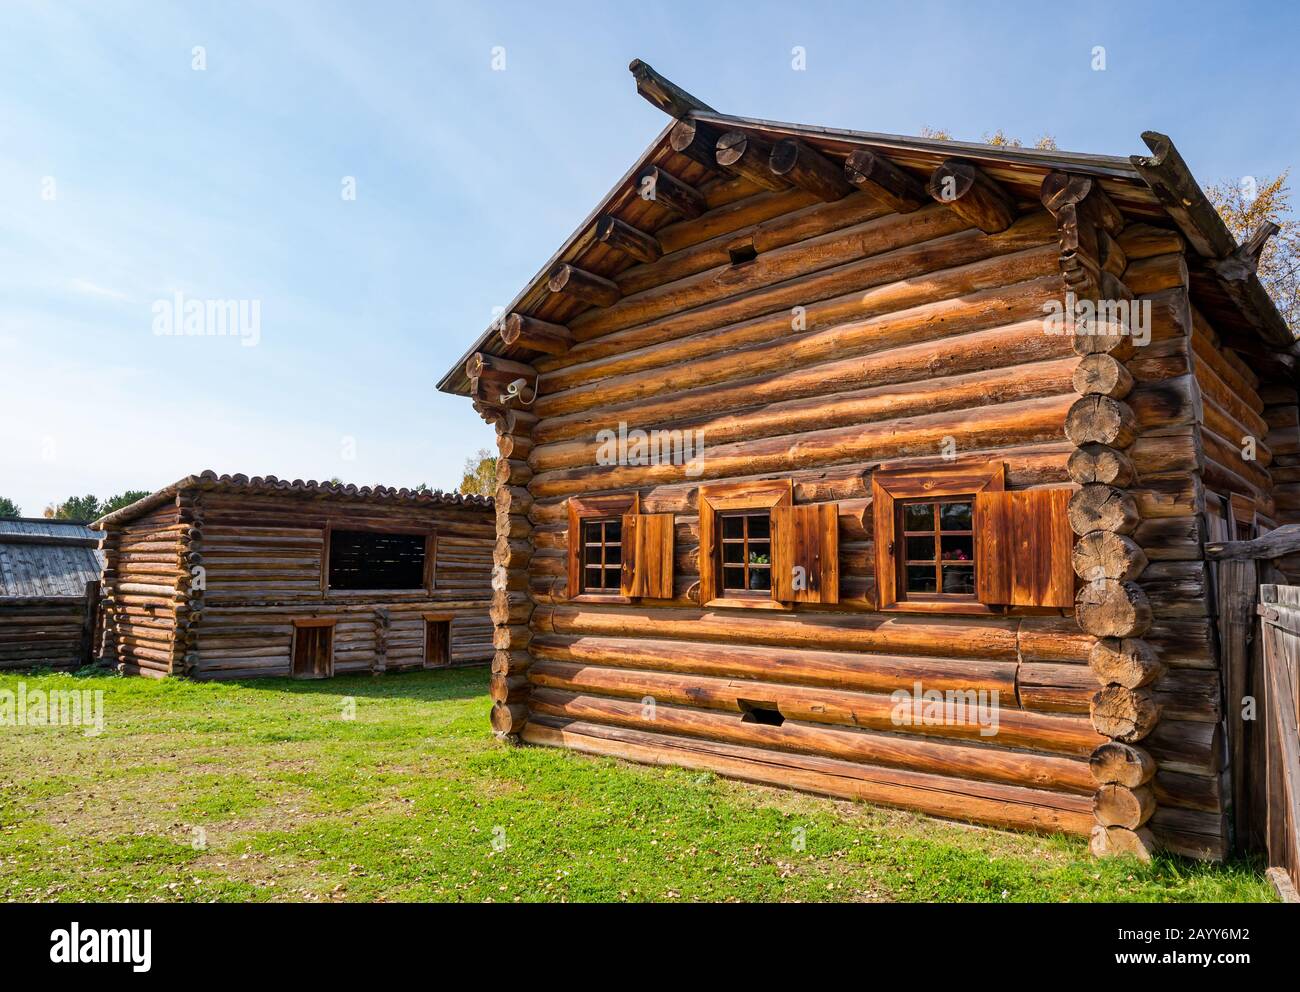 ventana en la casa vieja. casa de madera. choza rusa. ventana decorativa de  madera en una casa de troncos. arquitectura tradicional rusa. 14141294 Foto  de stock en Vecteezy